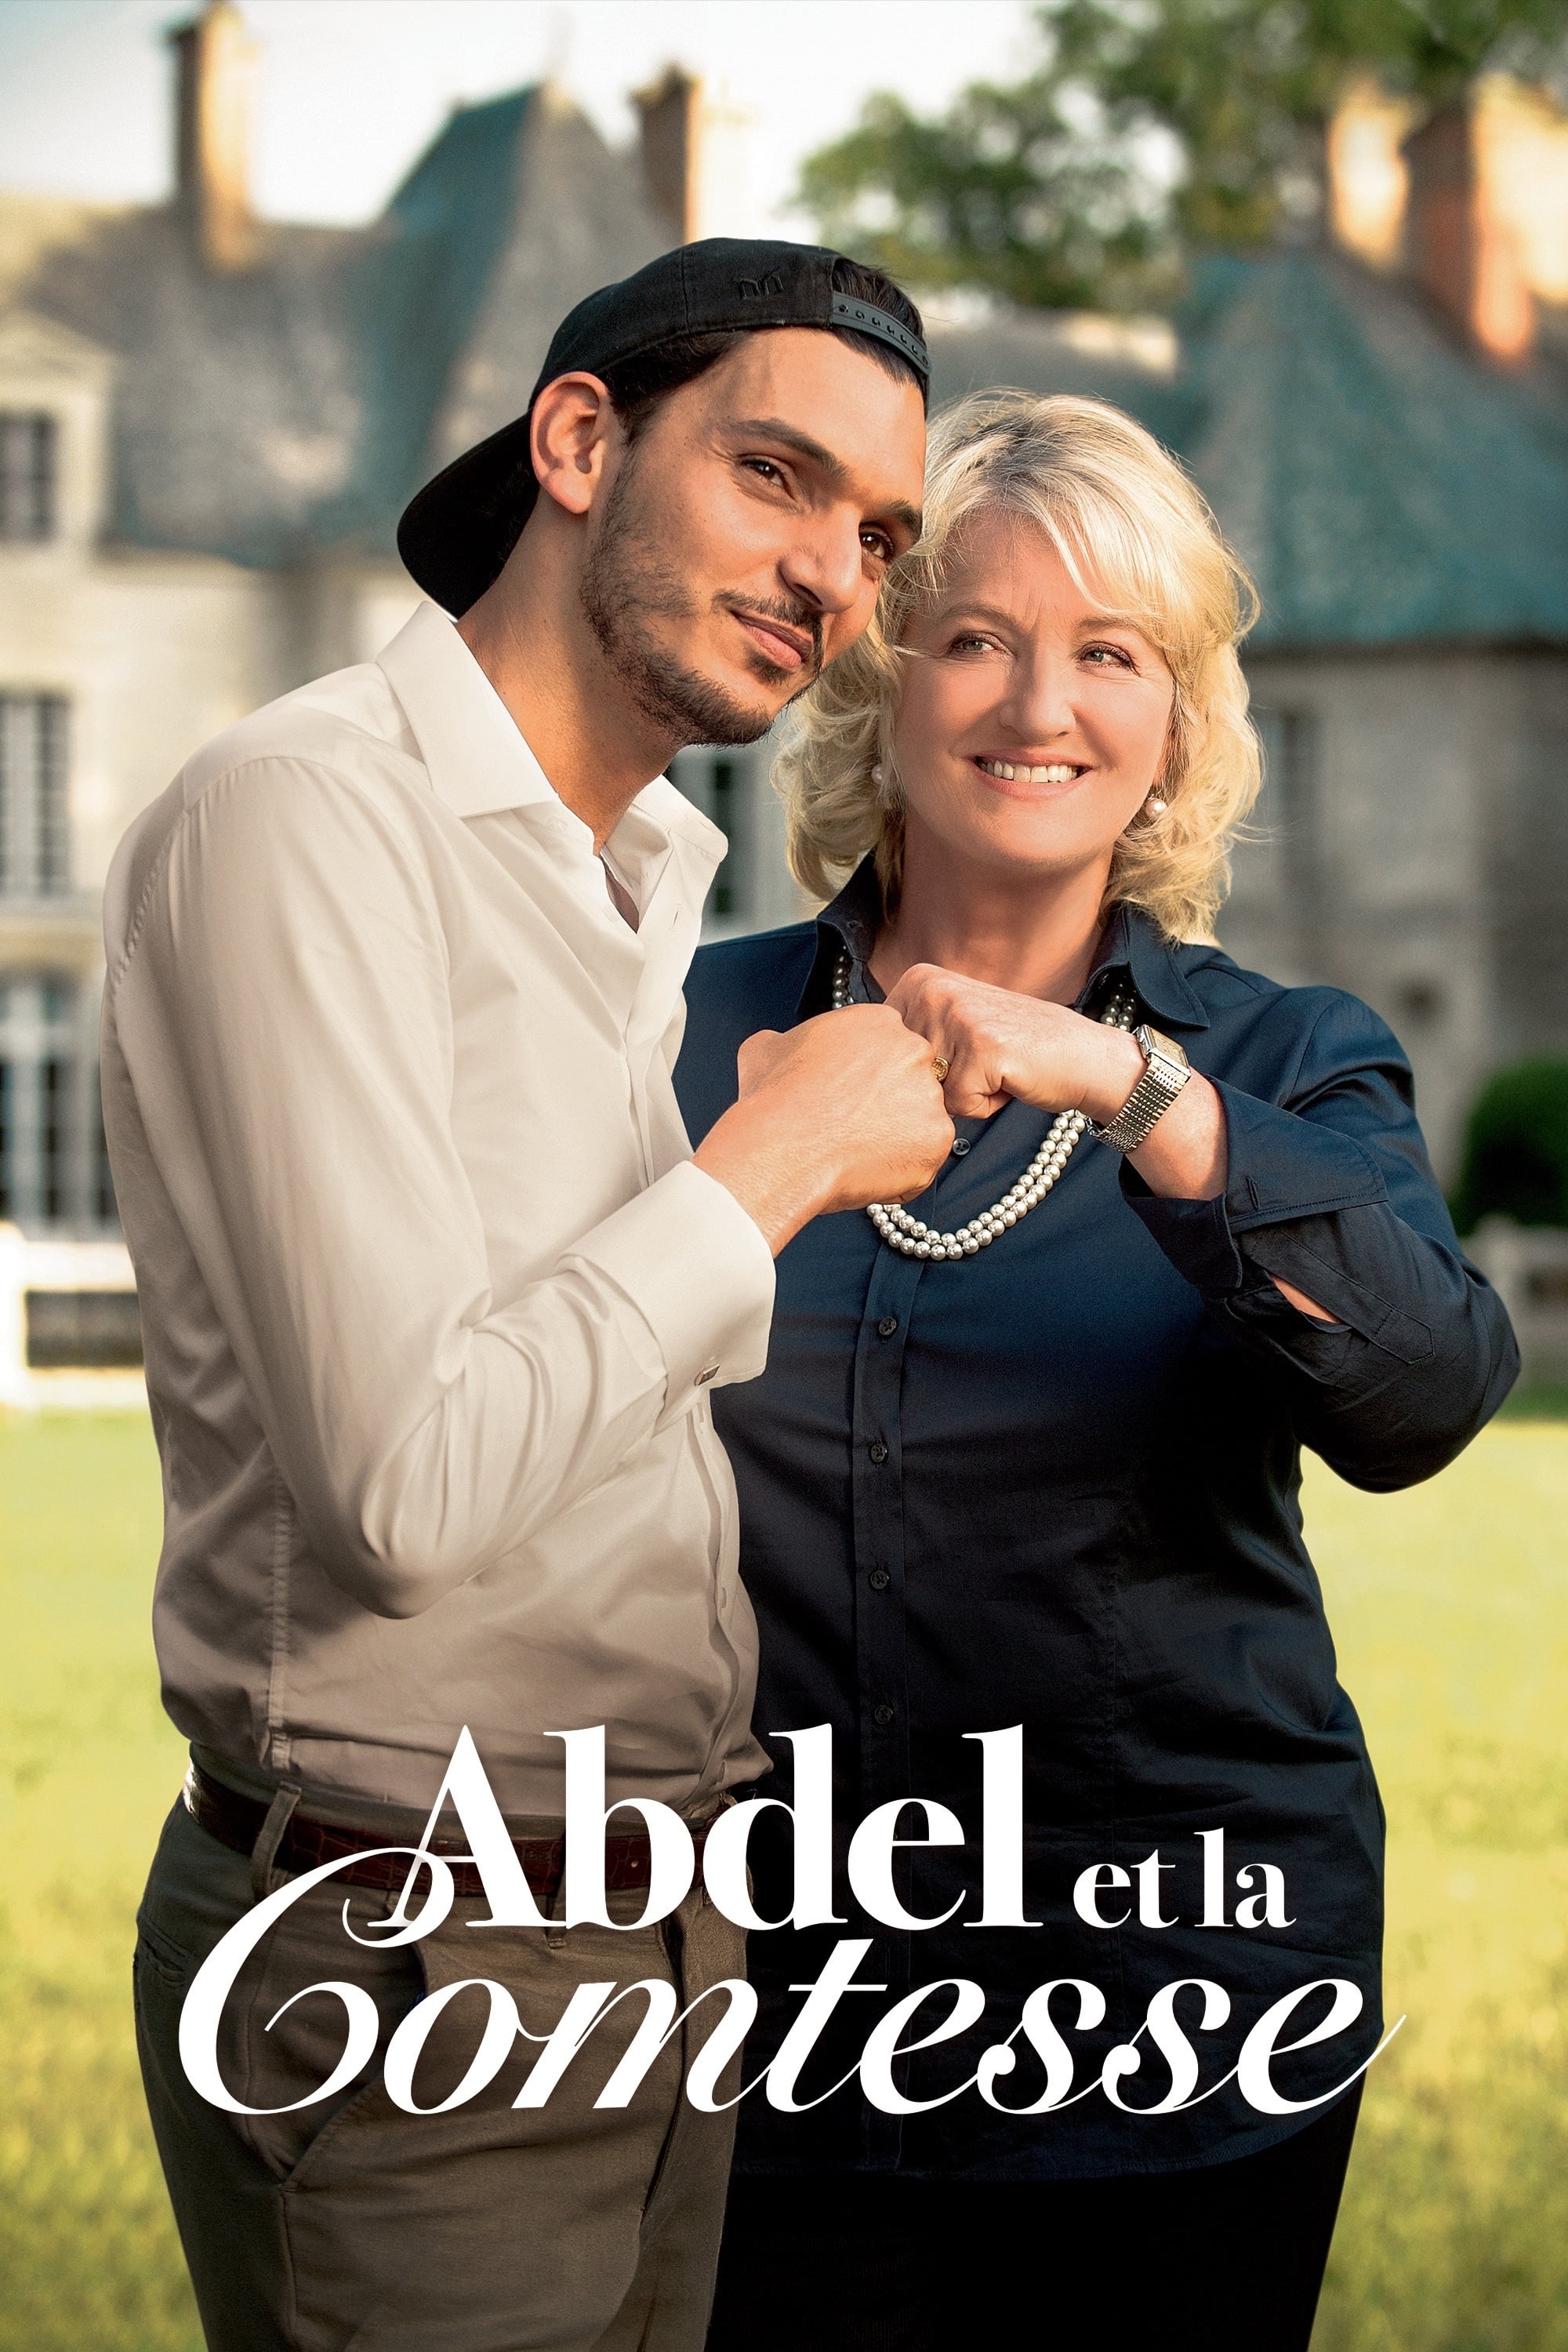 Abdel et la Comtesse film